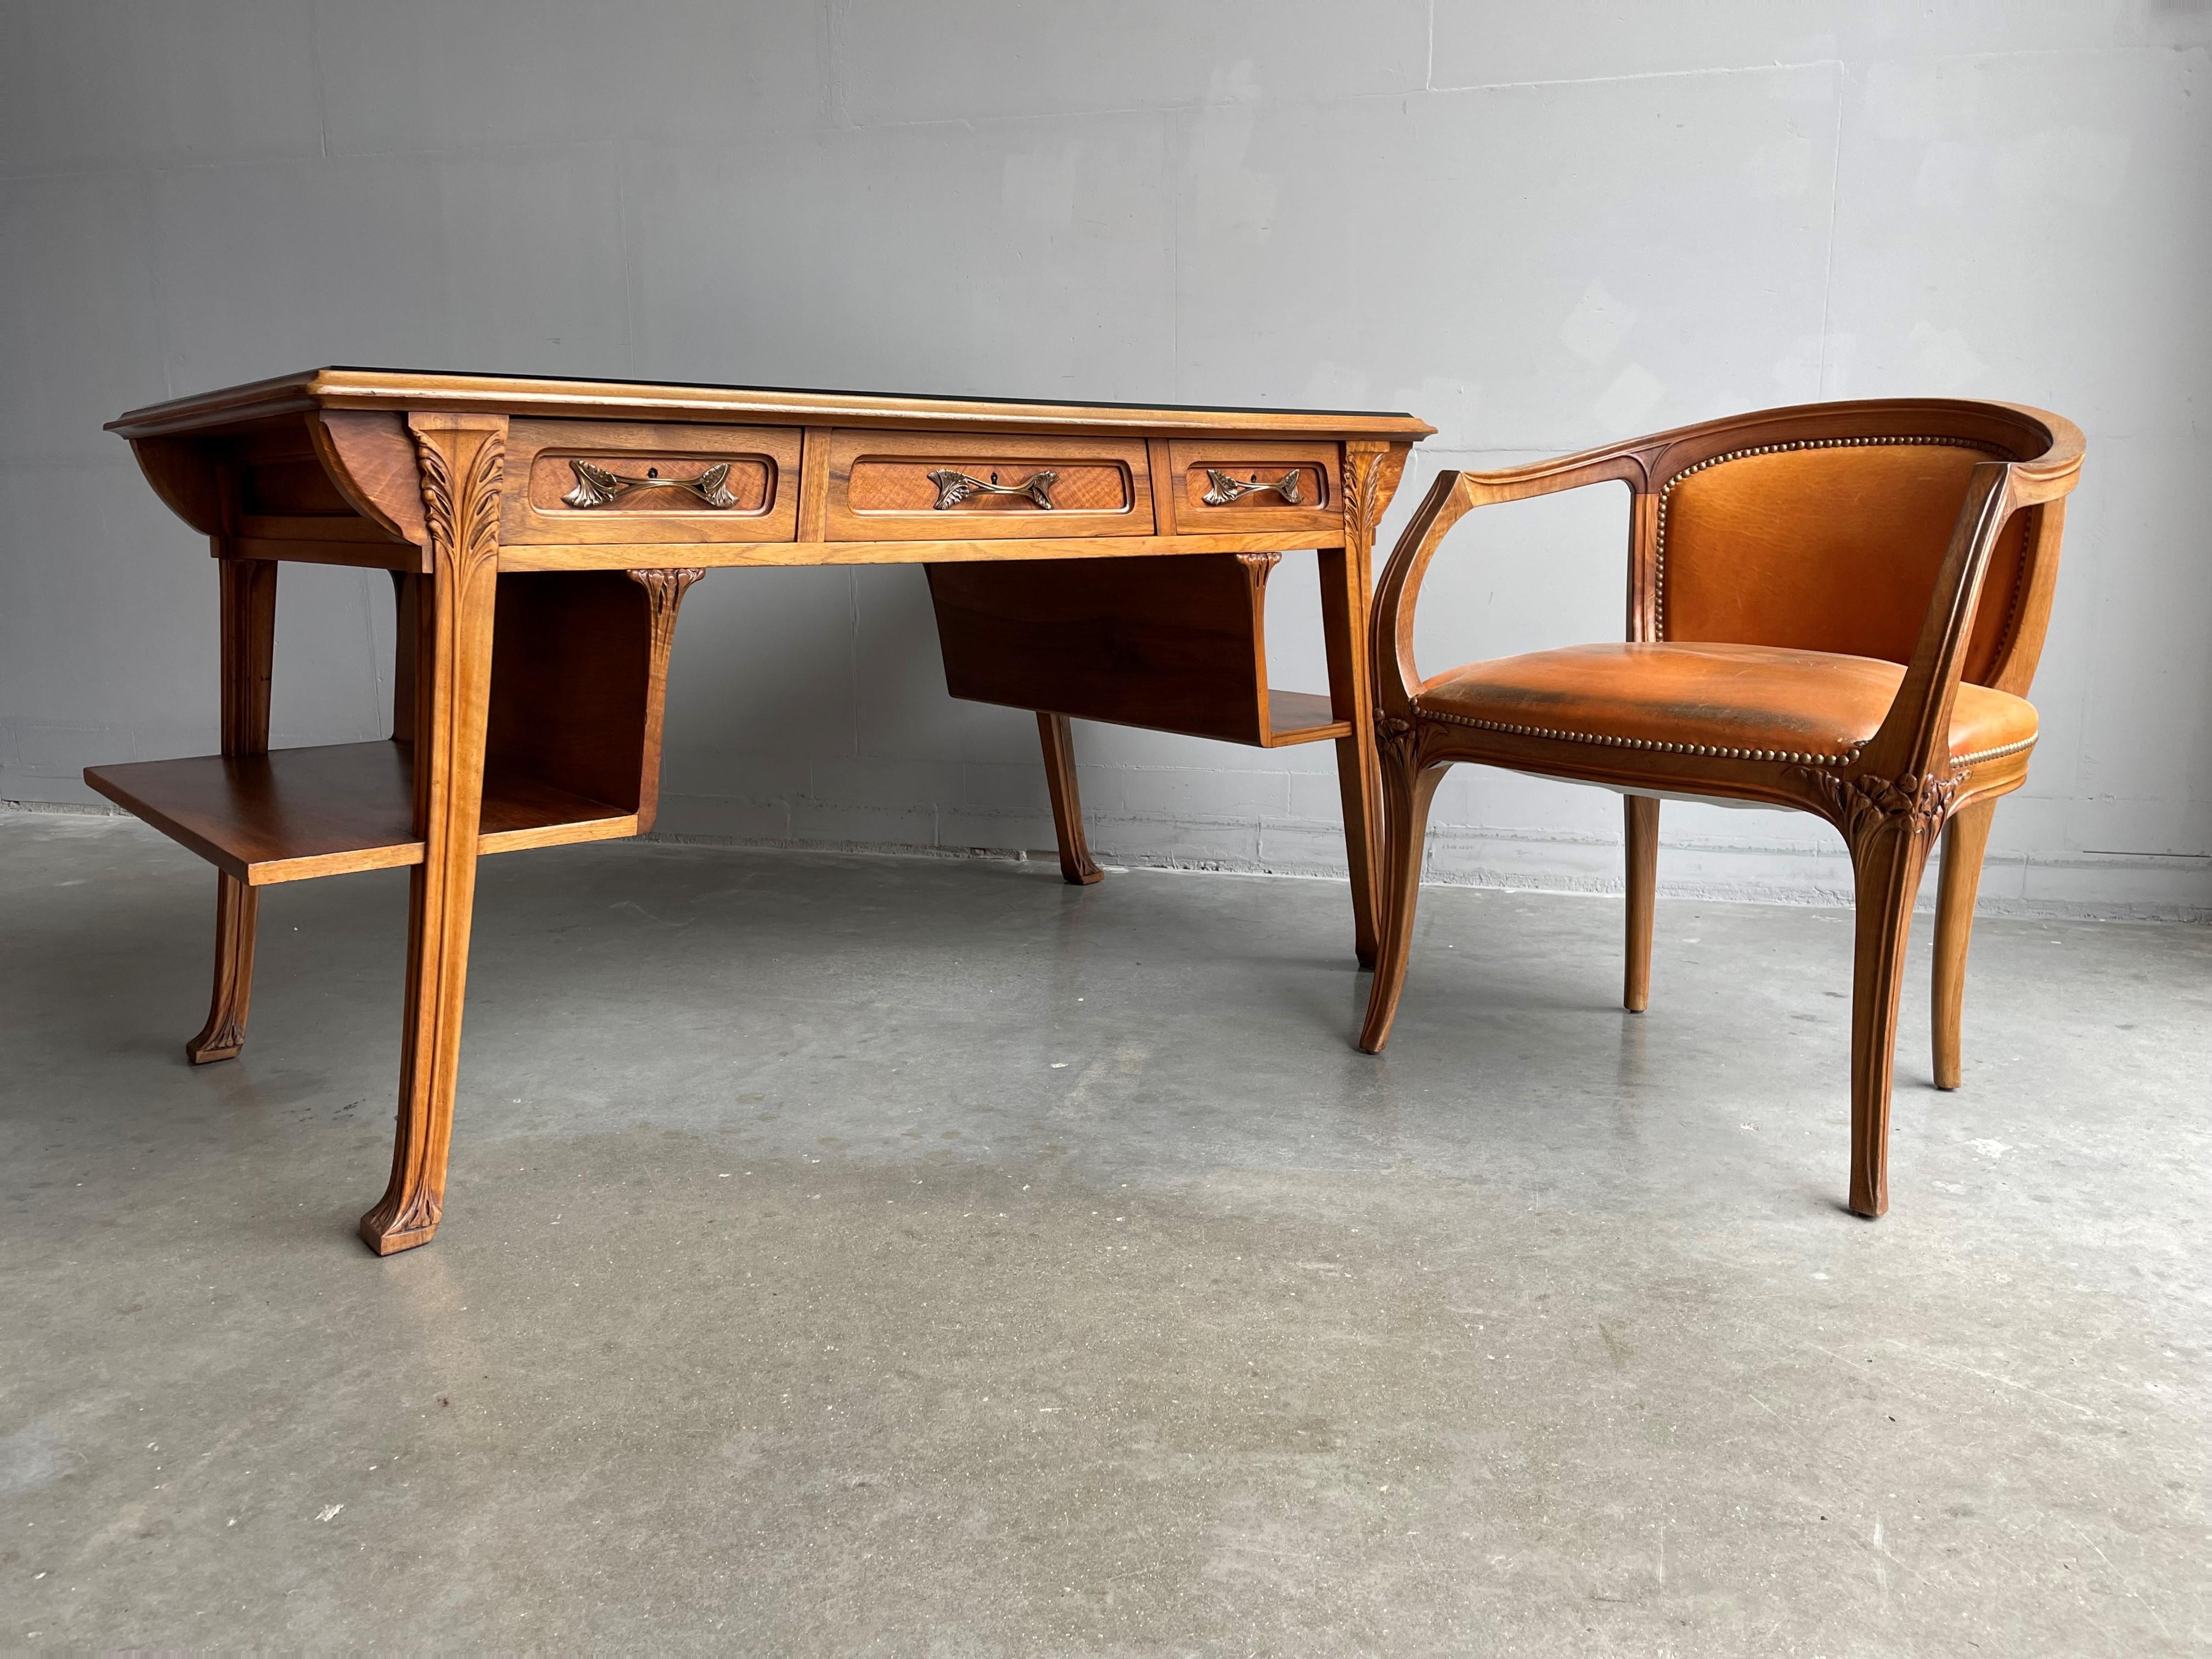 Hand-Carved Important Louis Majorelle Art Nouveau Desk and Chair, Bookcase & Filing Cabinet For Sale